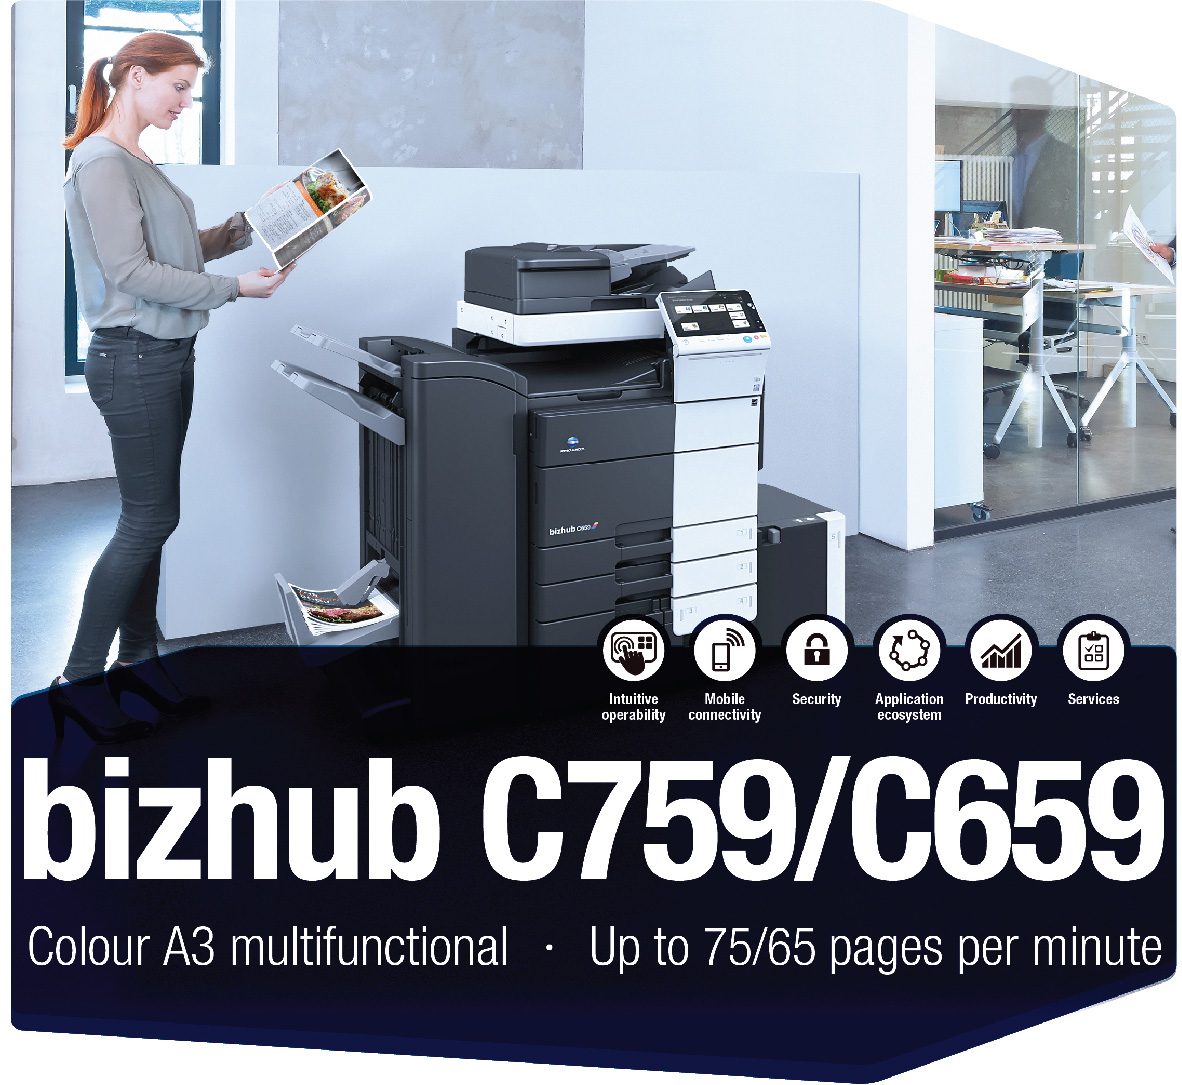 Konica Minolta’s new high-end quality colour A3 bizhub C759/C659 printers